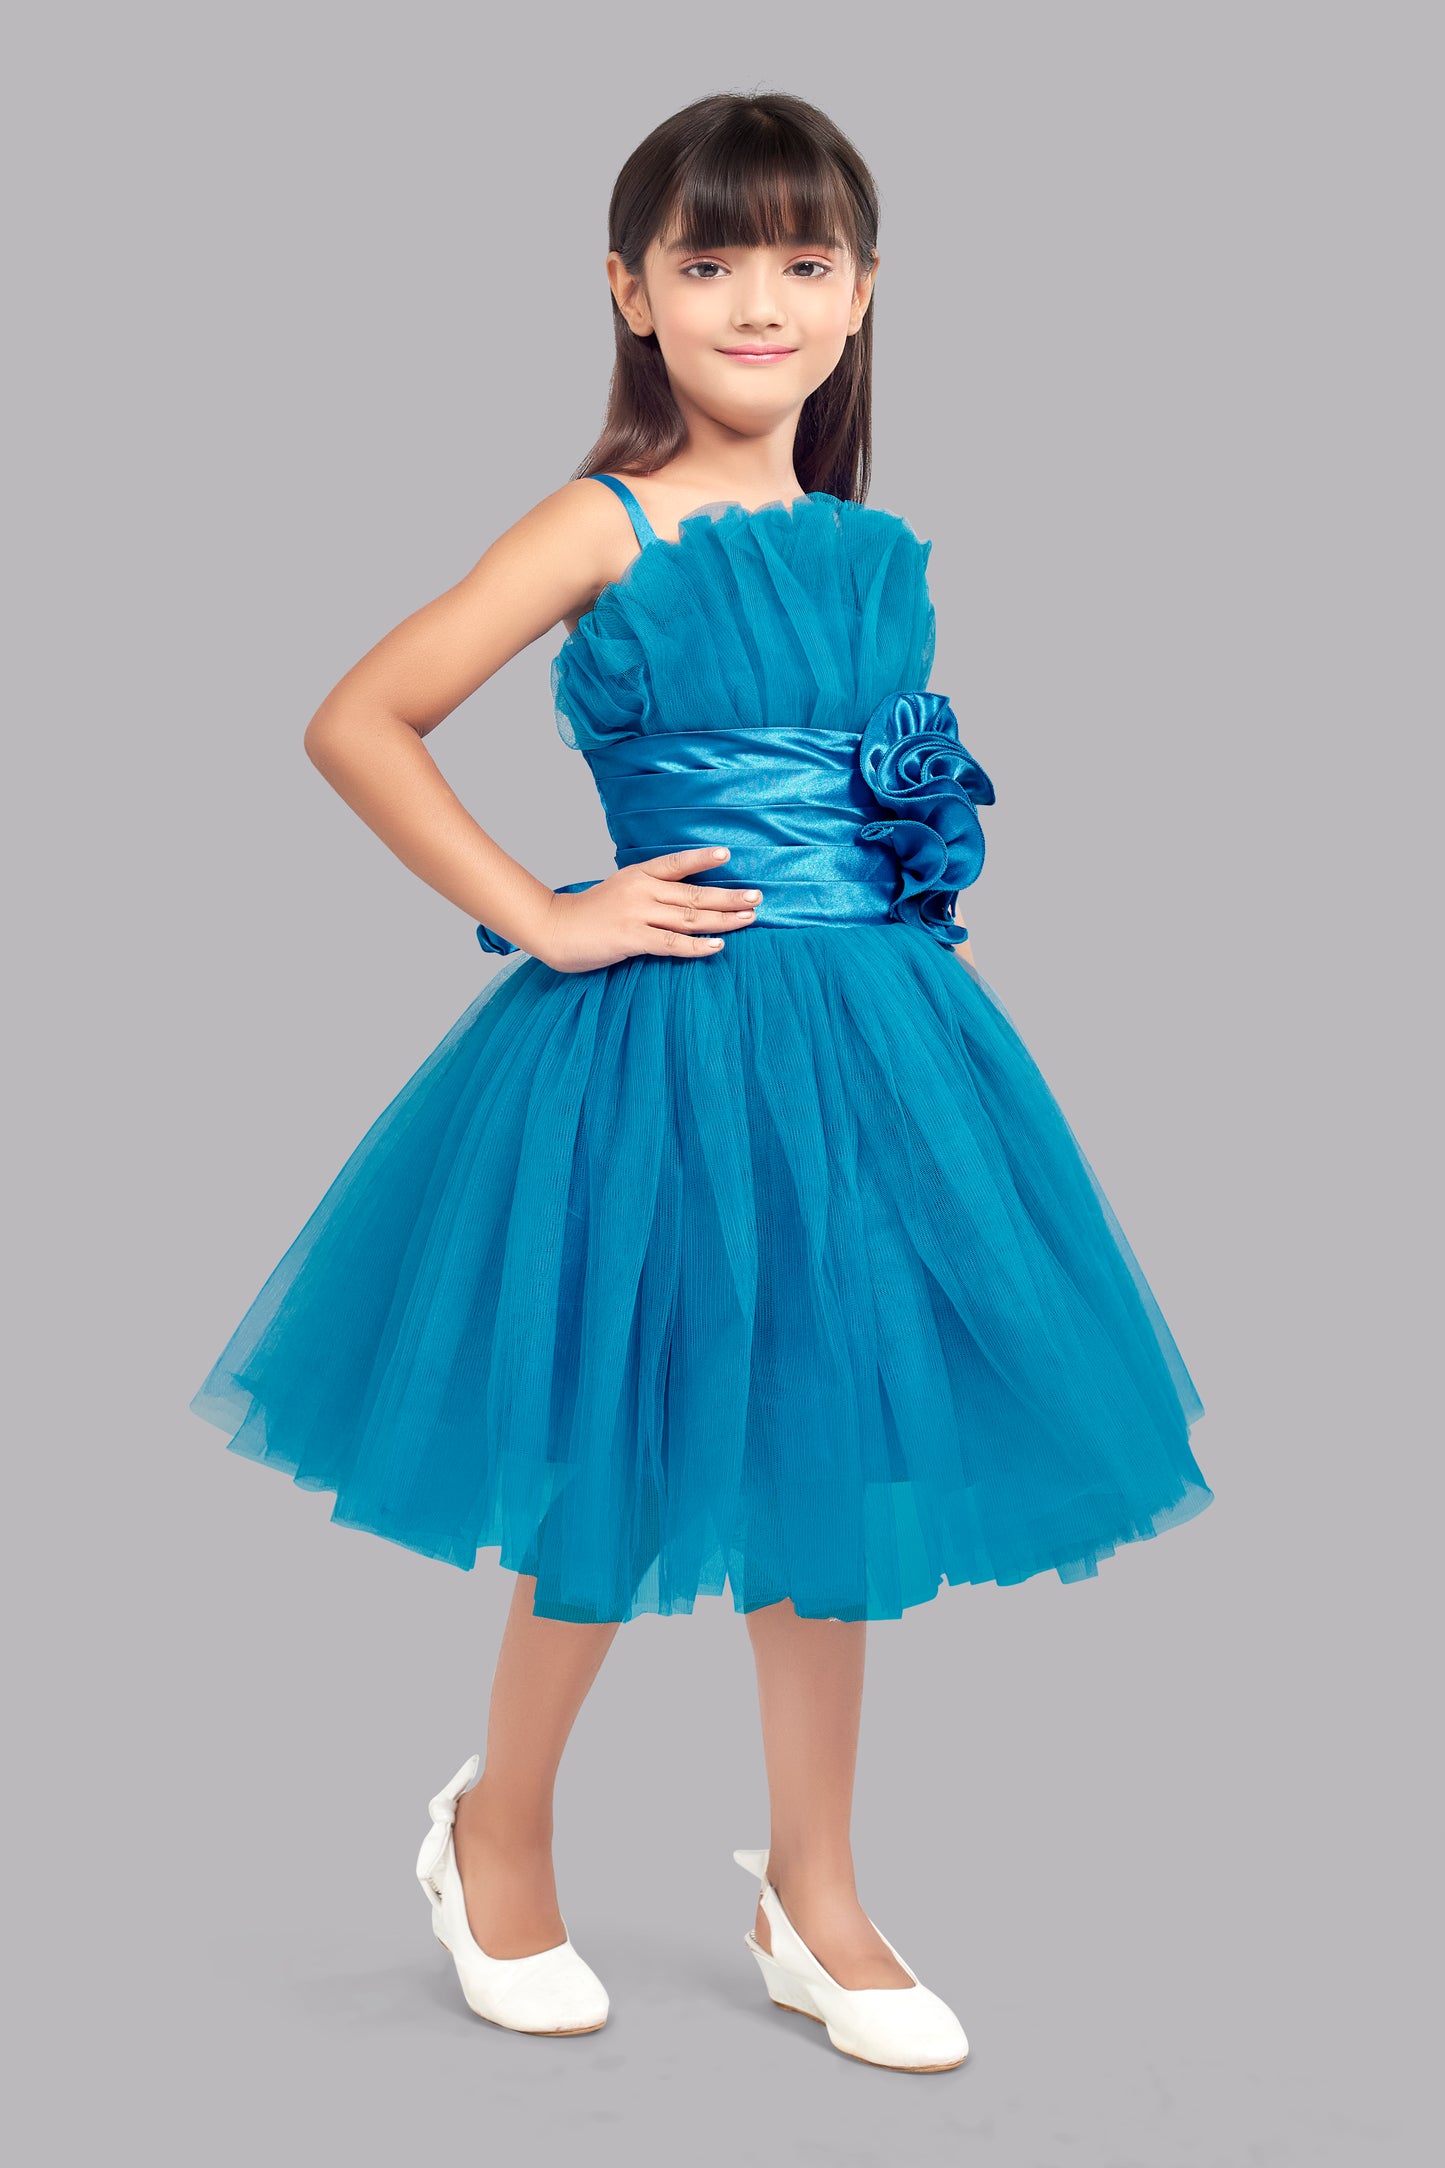 Ruffled Silhouette Party Dress- Pherozi Blue